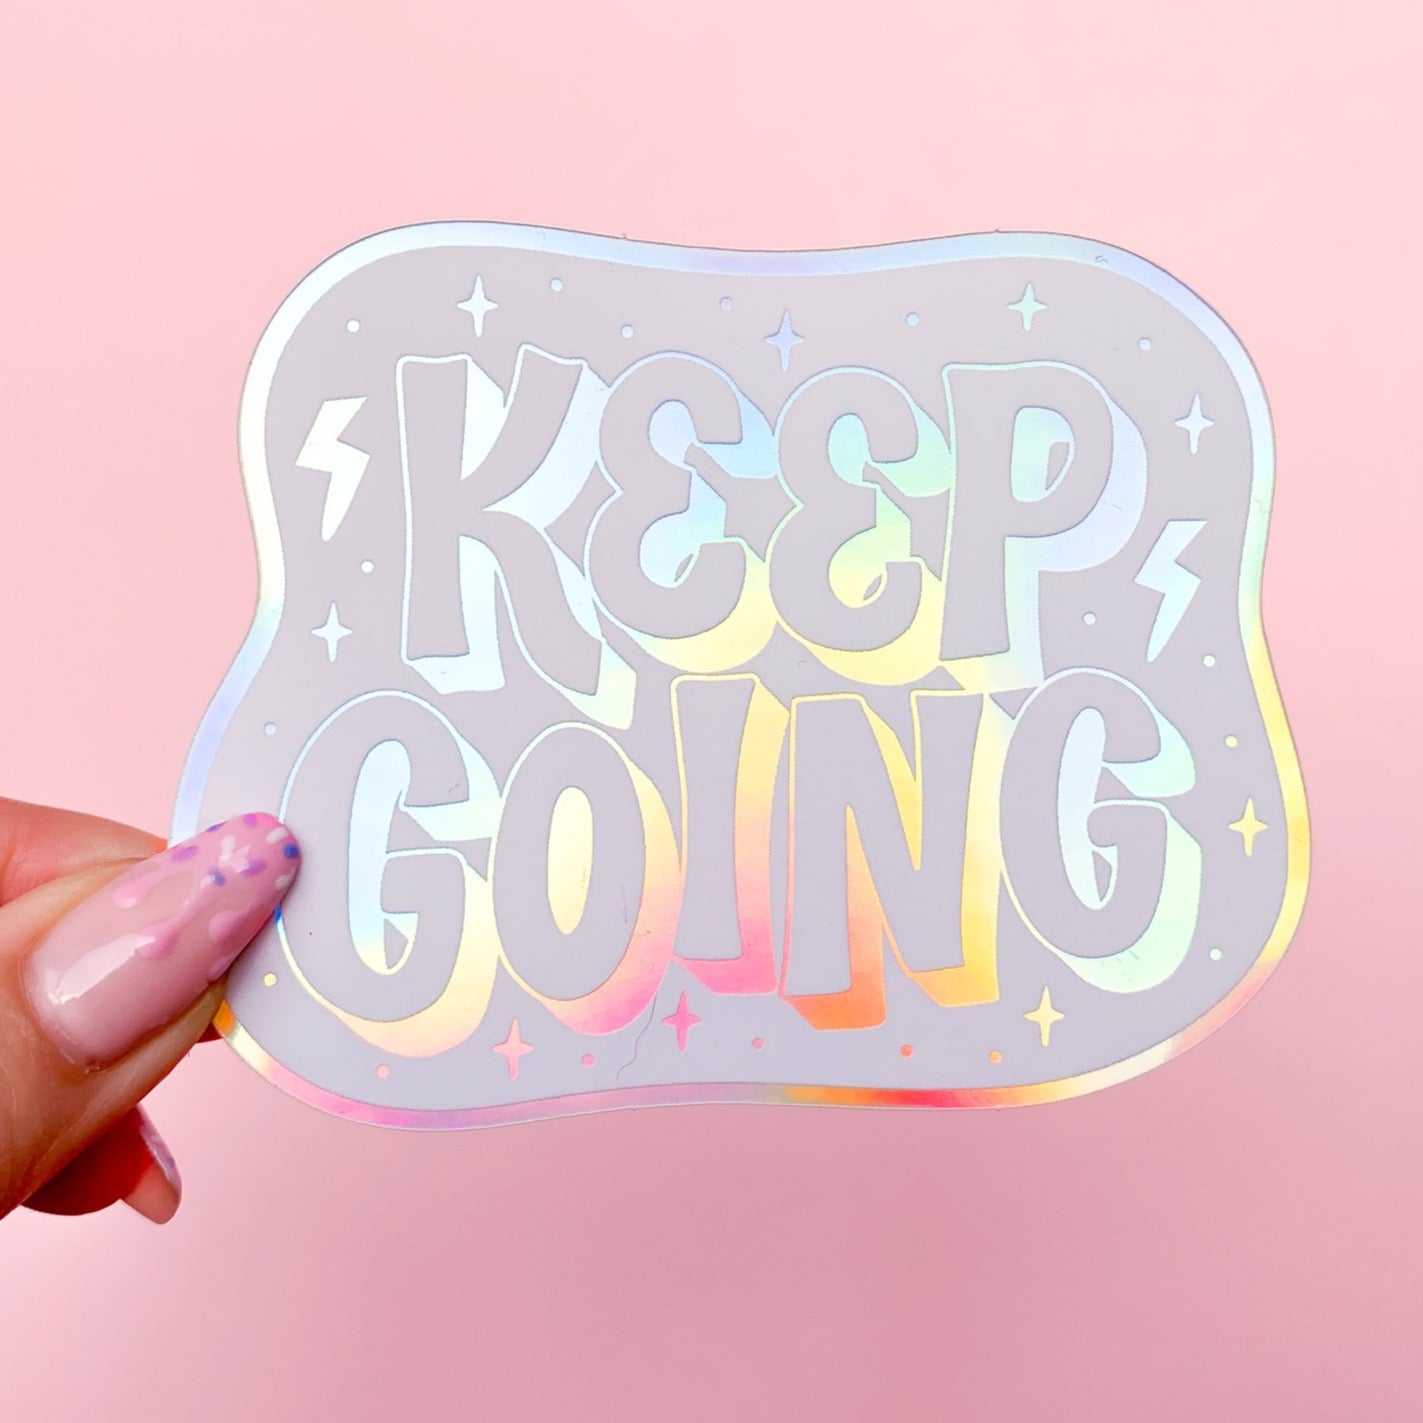 holographic vinyl waterproof motivational good vibe sticker promotes positivity